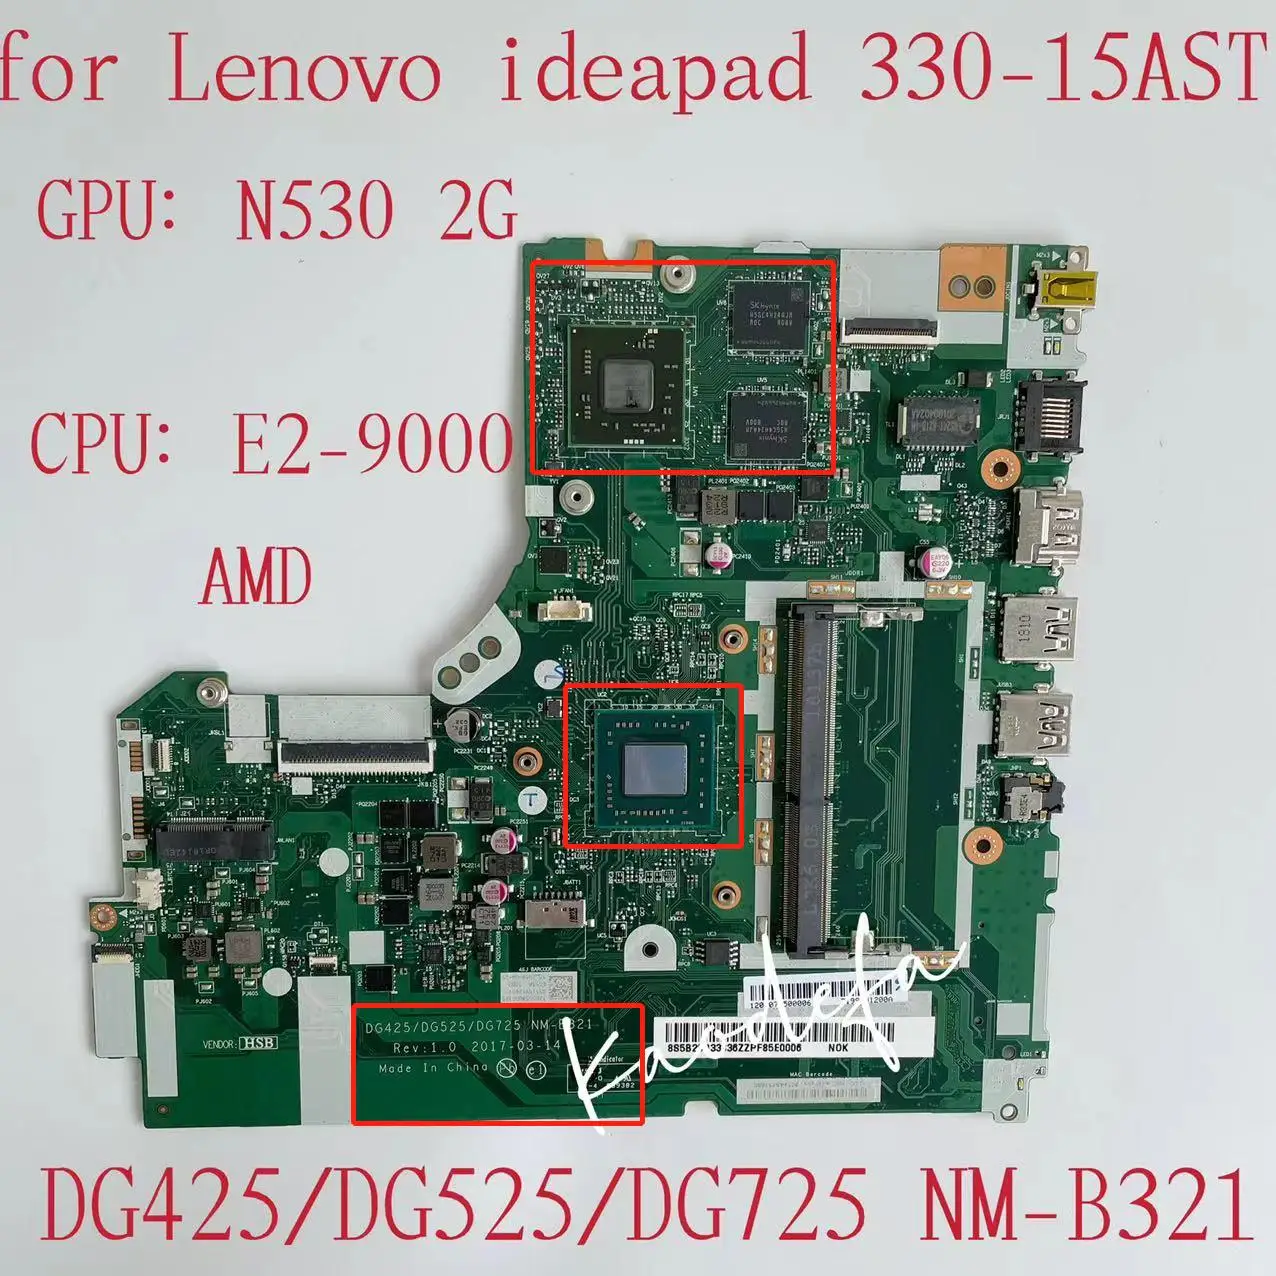 Lenovo Ideapad 330 15ast Motherboard Lenovo Ideapad 330 Amd Motherboard  Nm-b321 Aliexpress